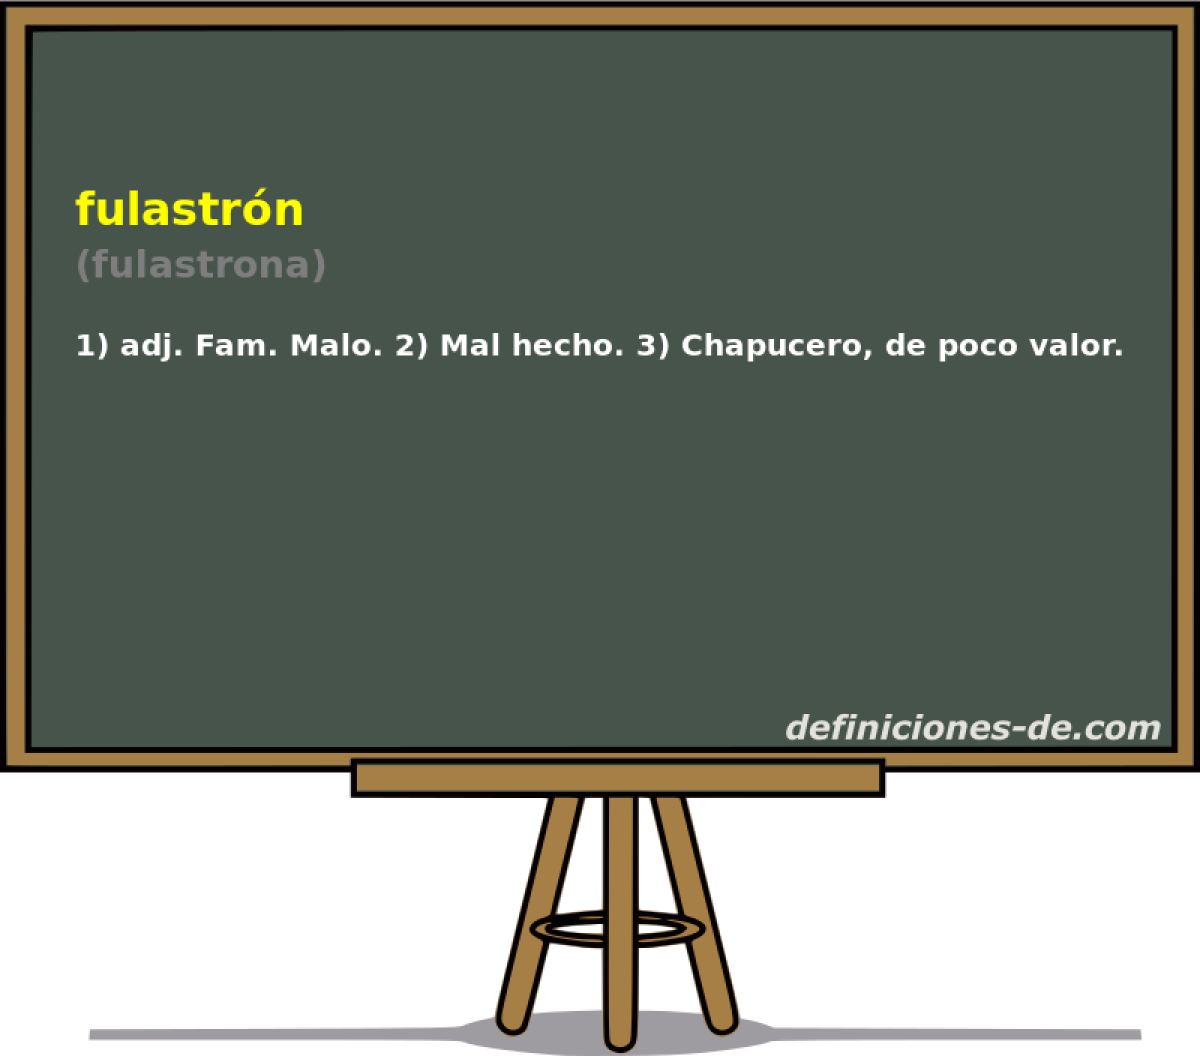 fulastrn (fulastrona)